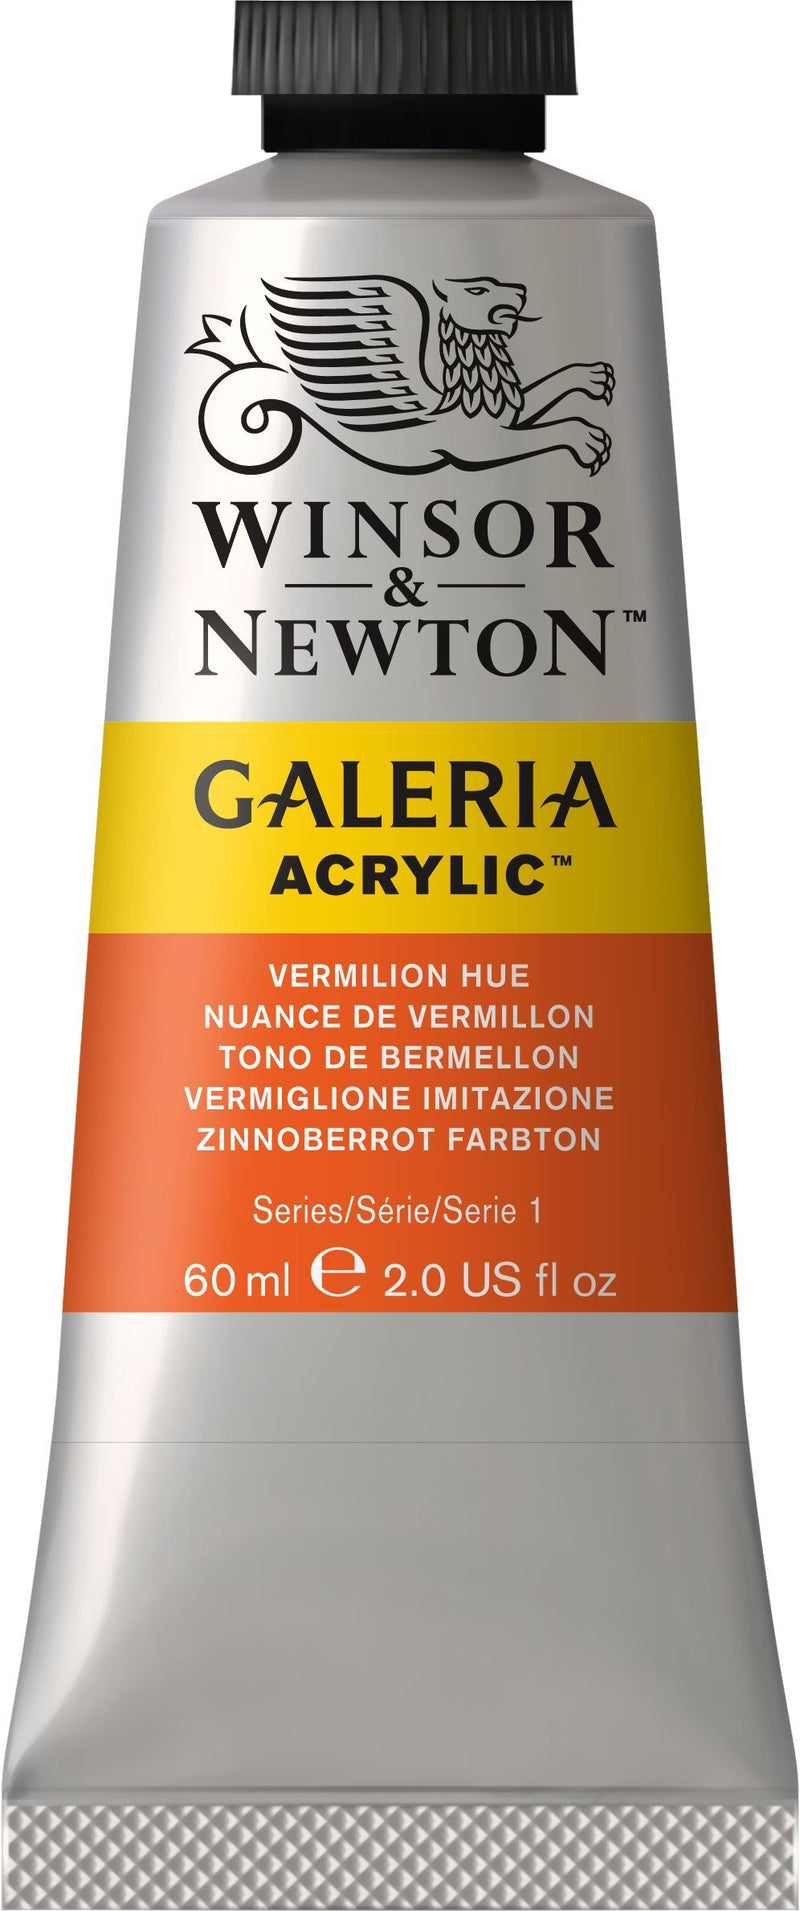 Winsor & Newton Galeria Acrylic Paint 60ml